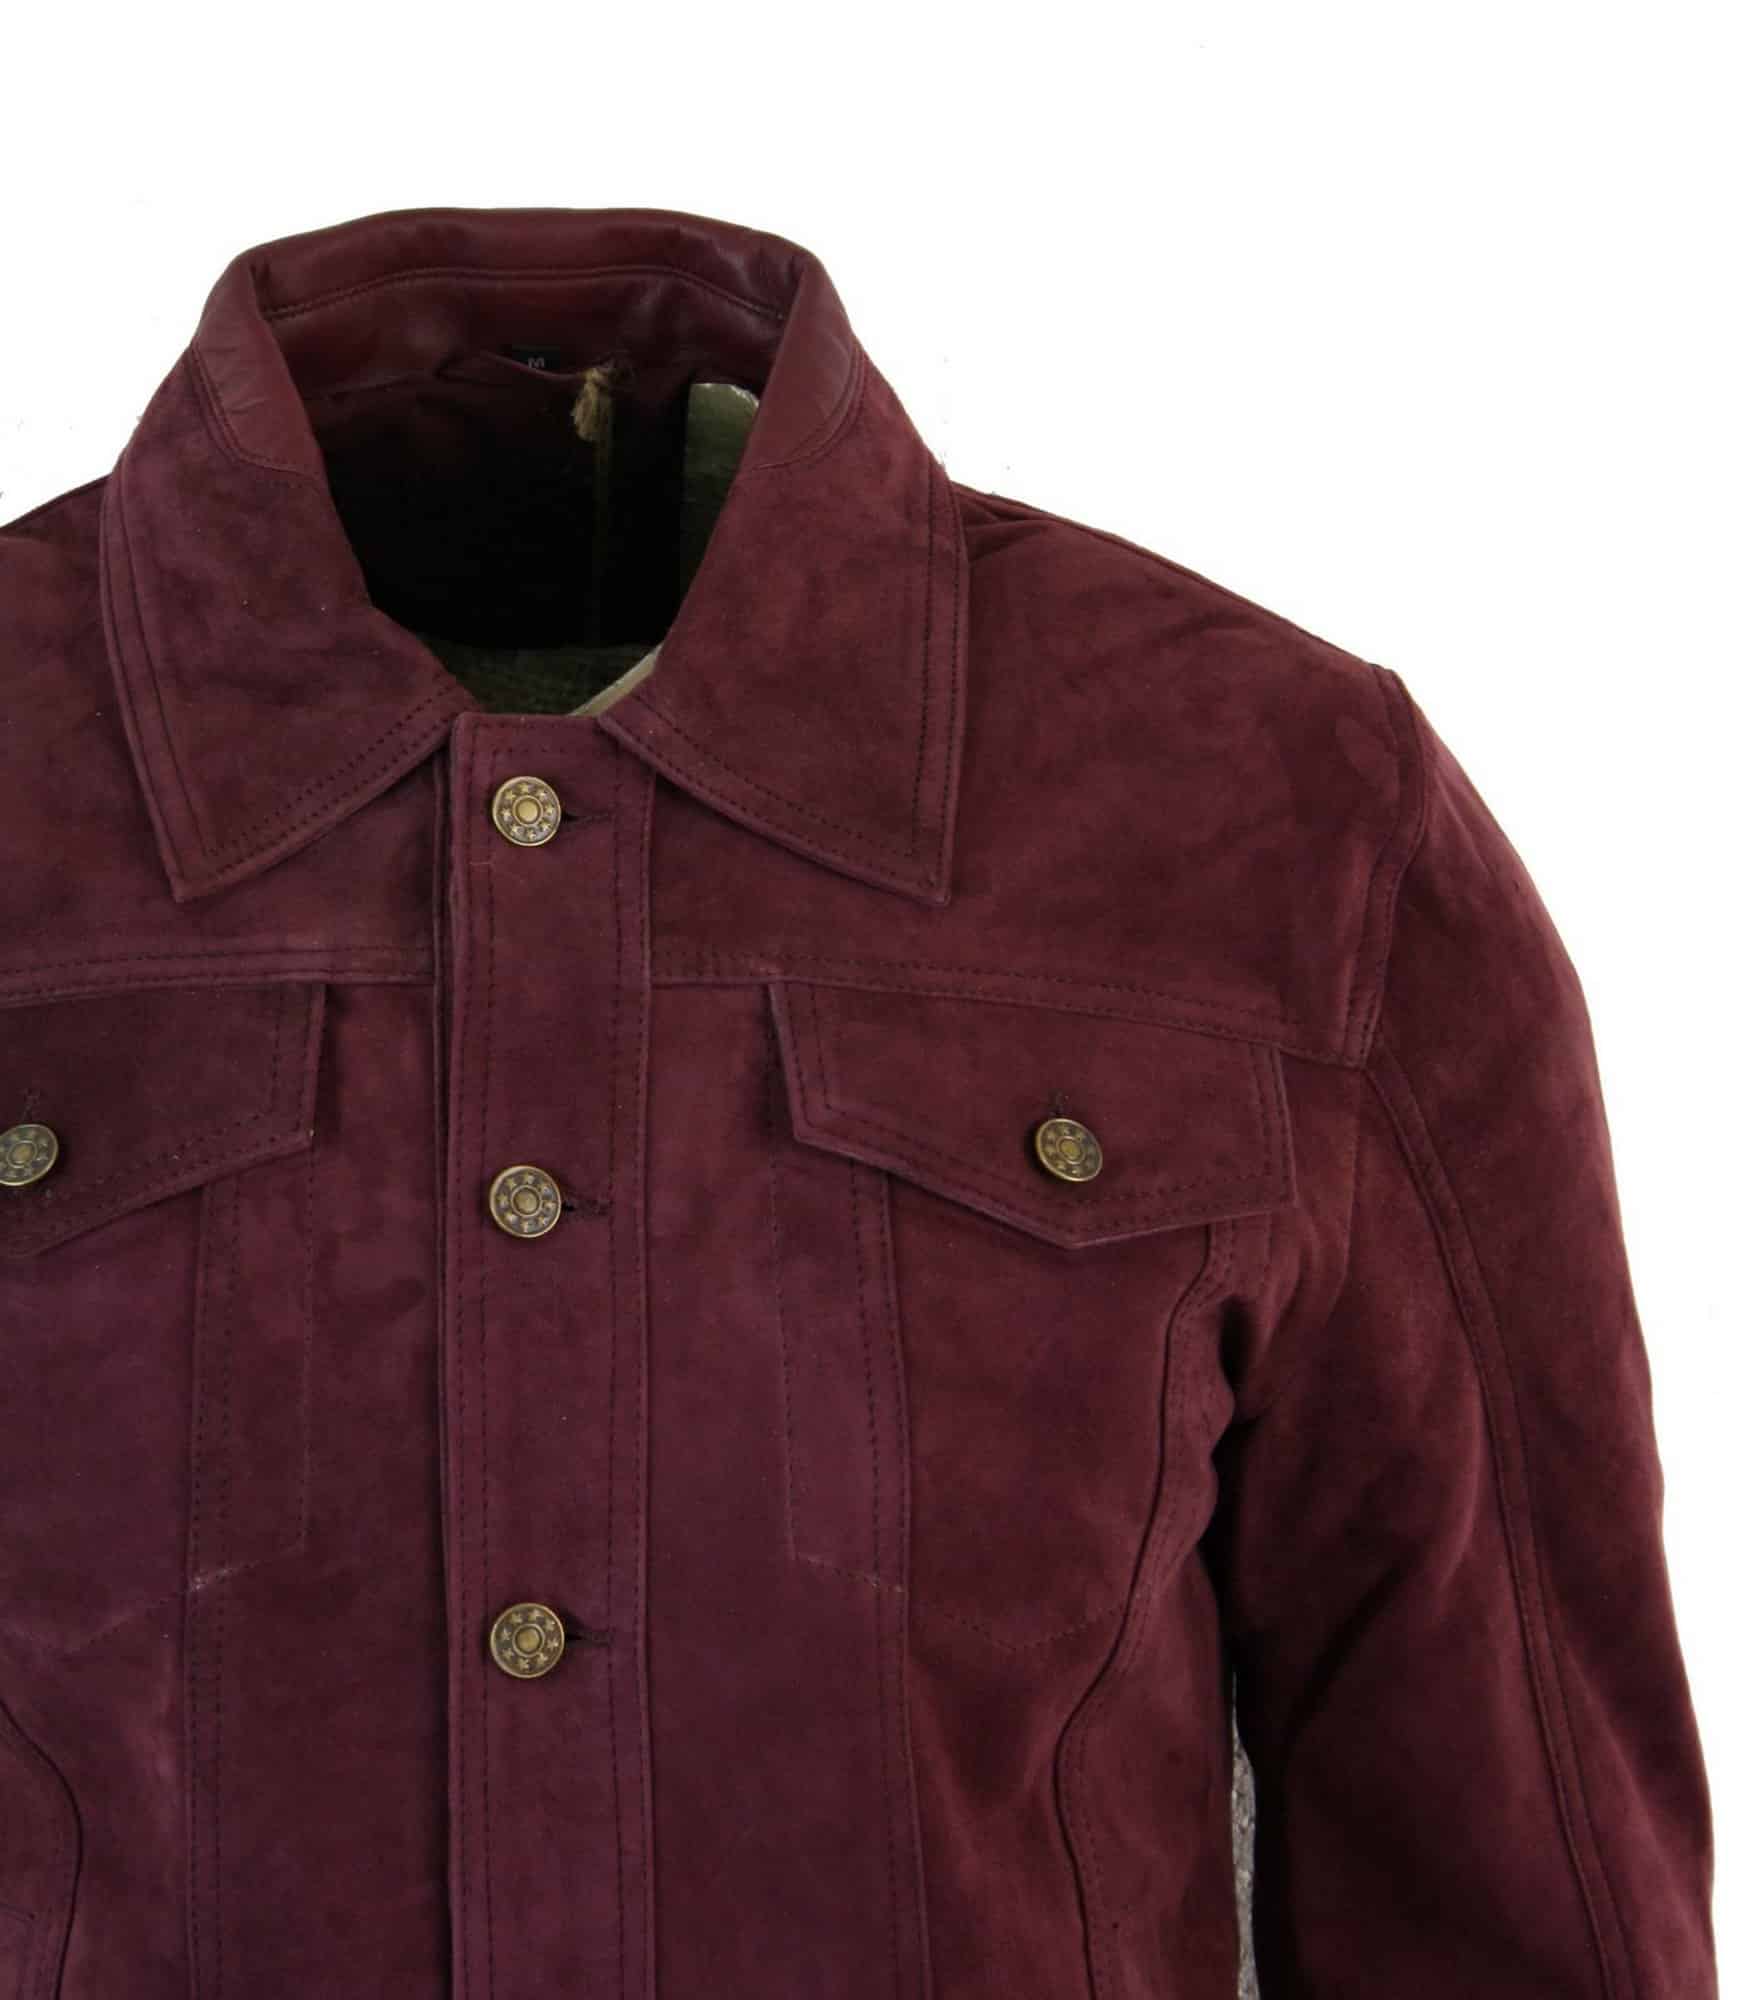 Buy ARBIA FUNKI Men Boys Full Sleeve Denim Jacket -Maroon,M at Amazon.in